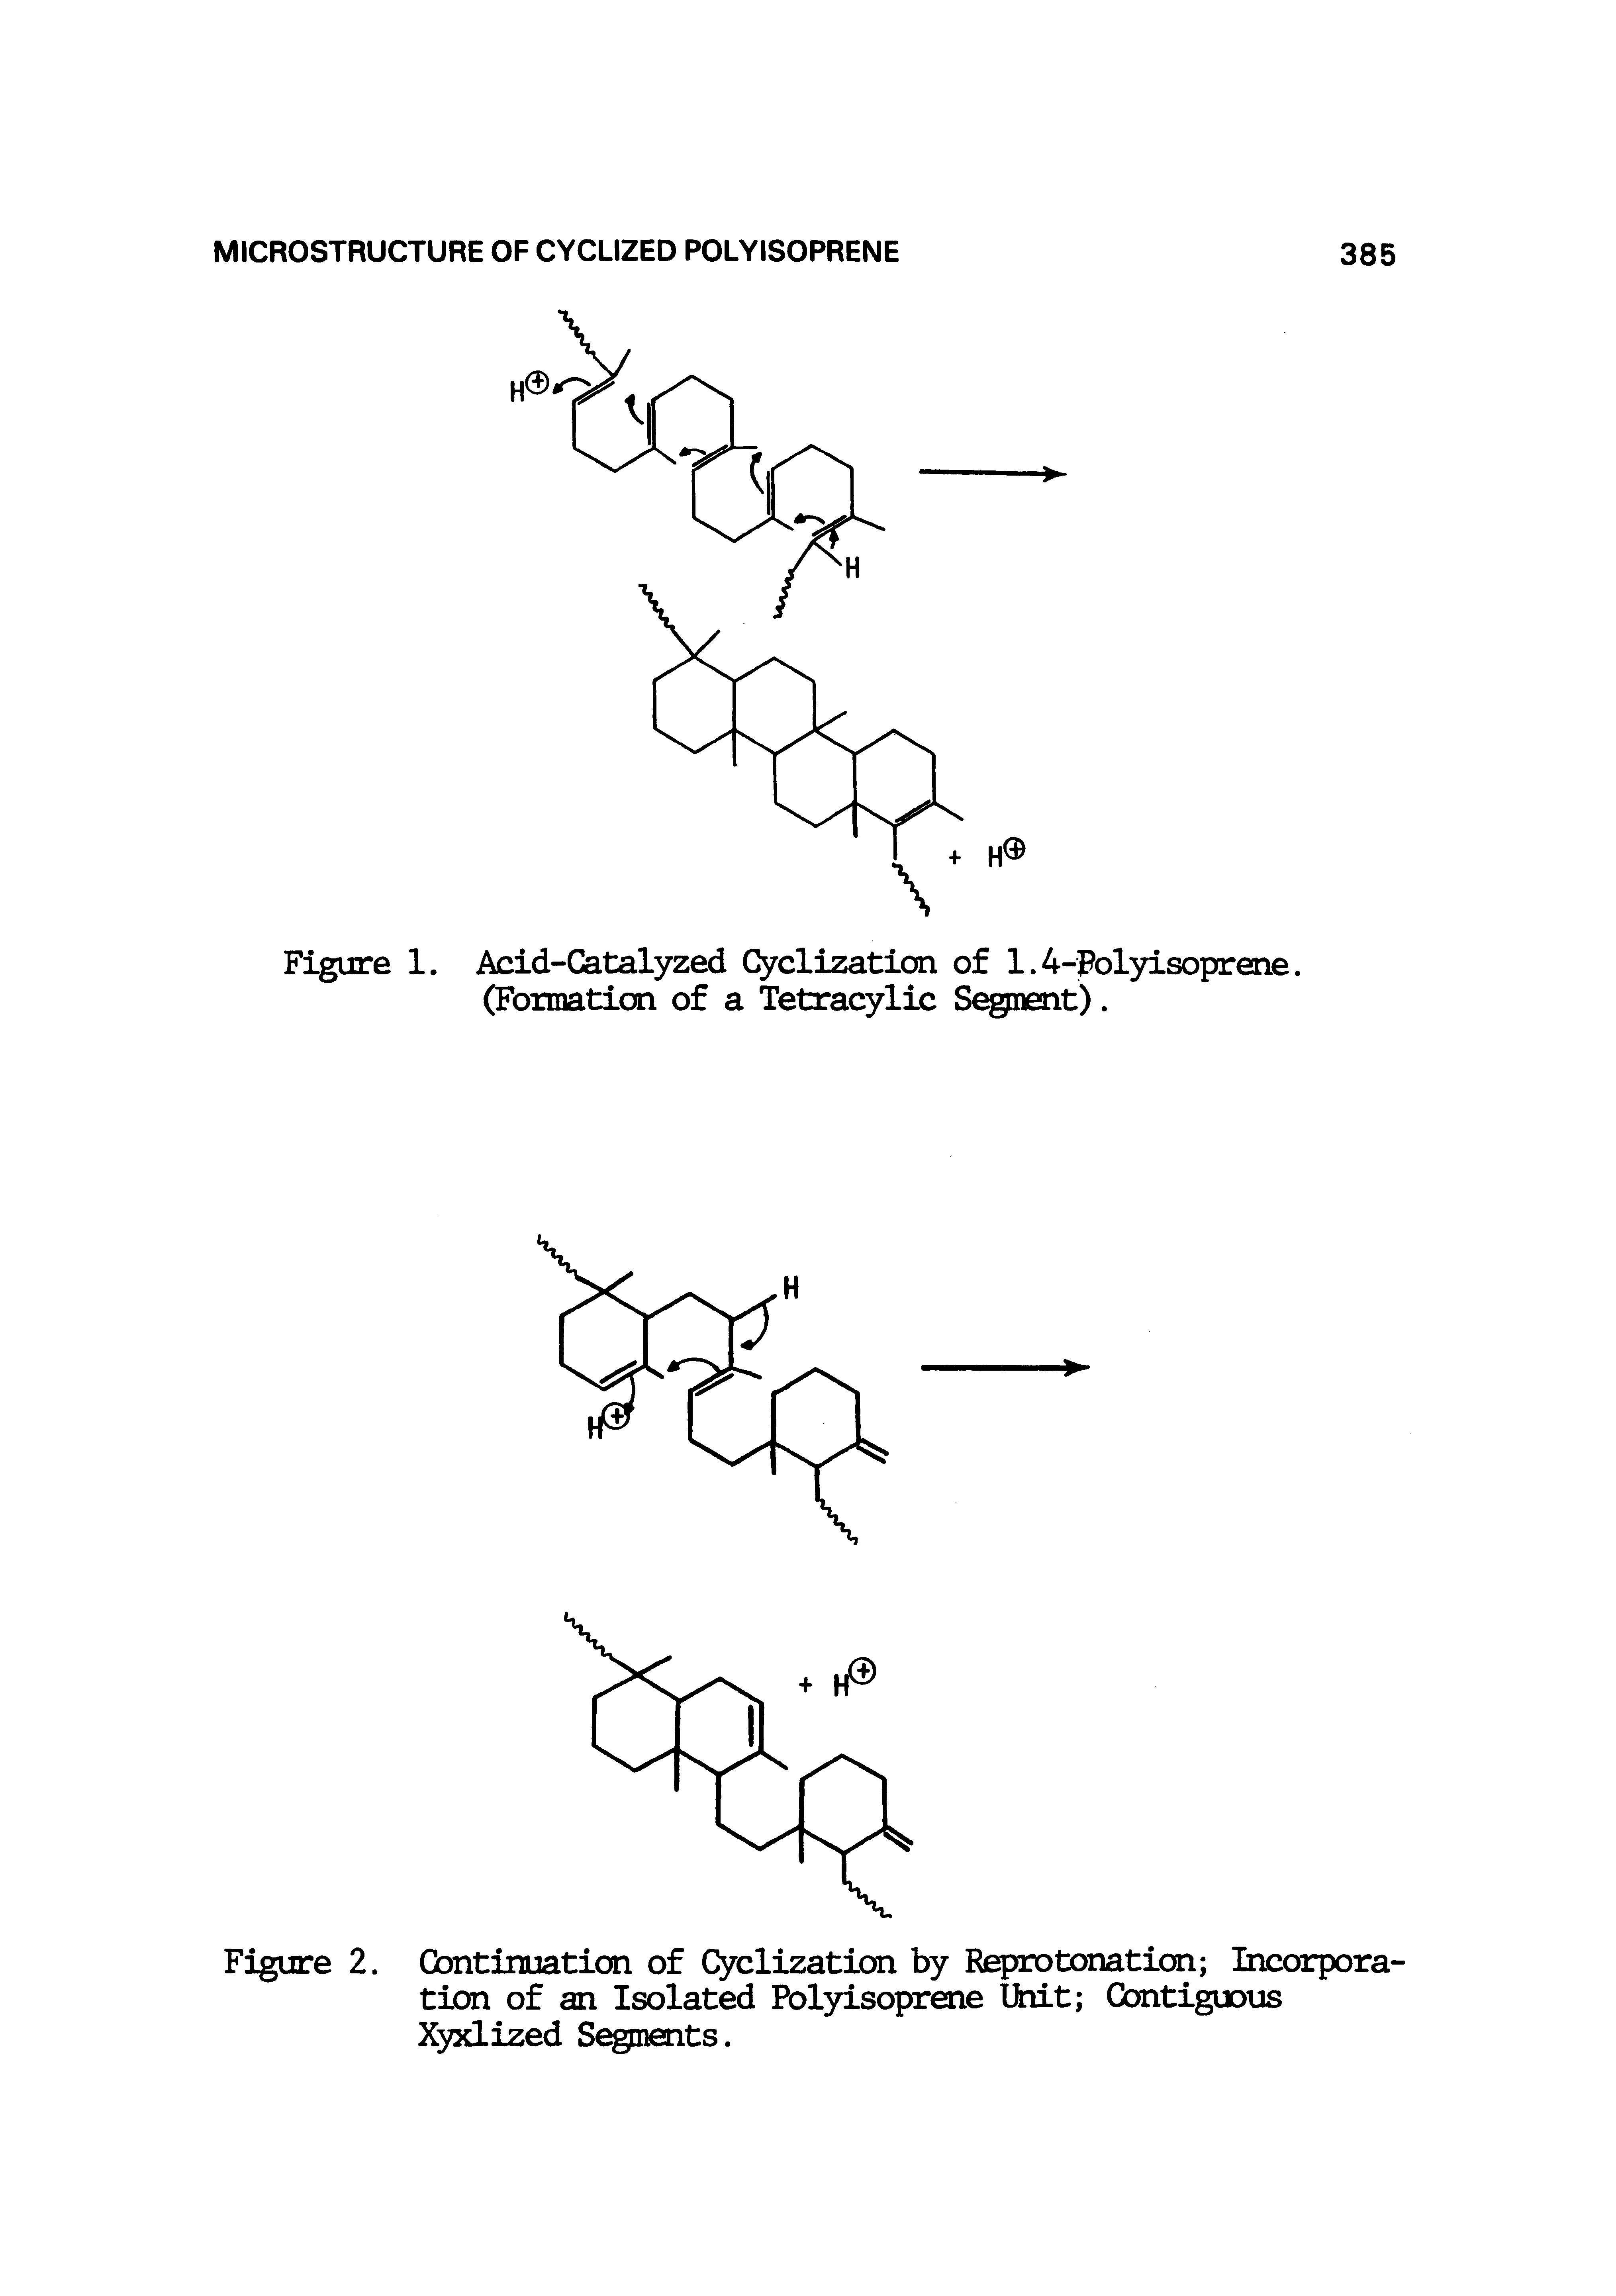 Figure 1. Acid-Catalyzed Cyclization of 1.4-Polyisoprene. (Formation of a Tetracylic S nent).